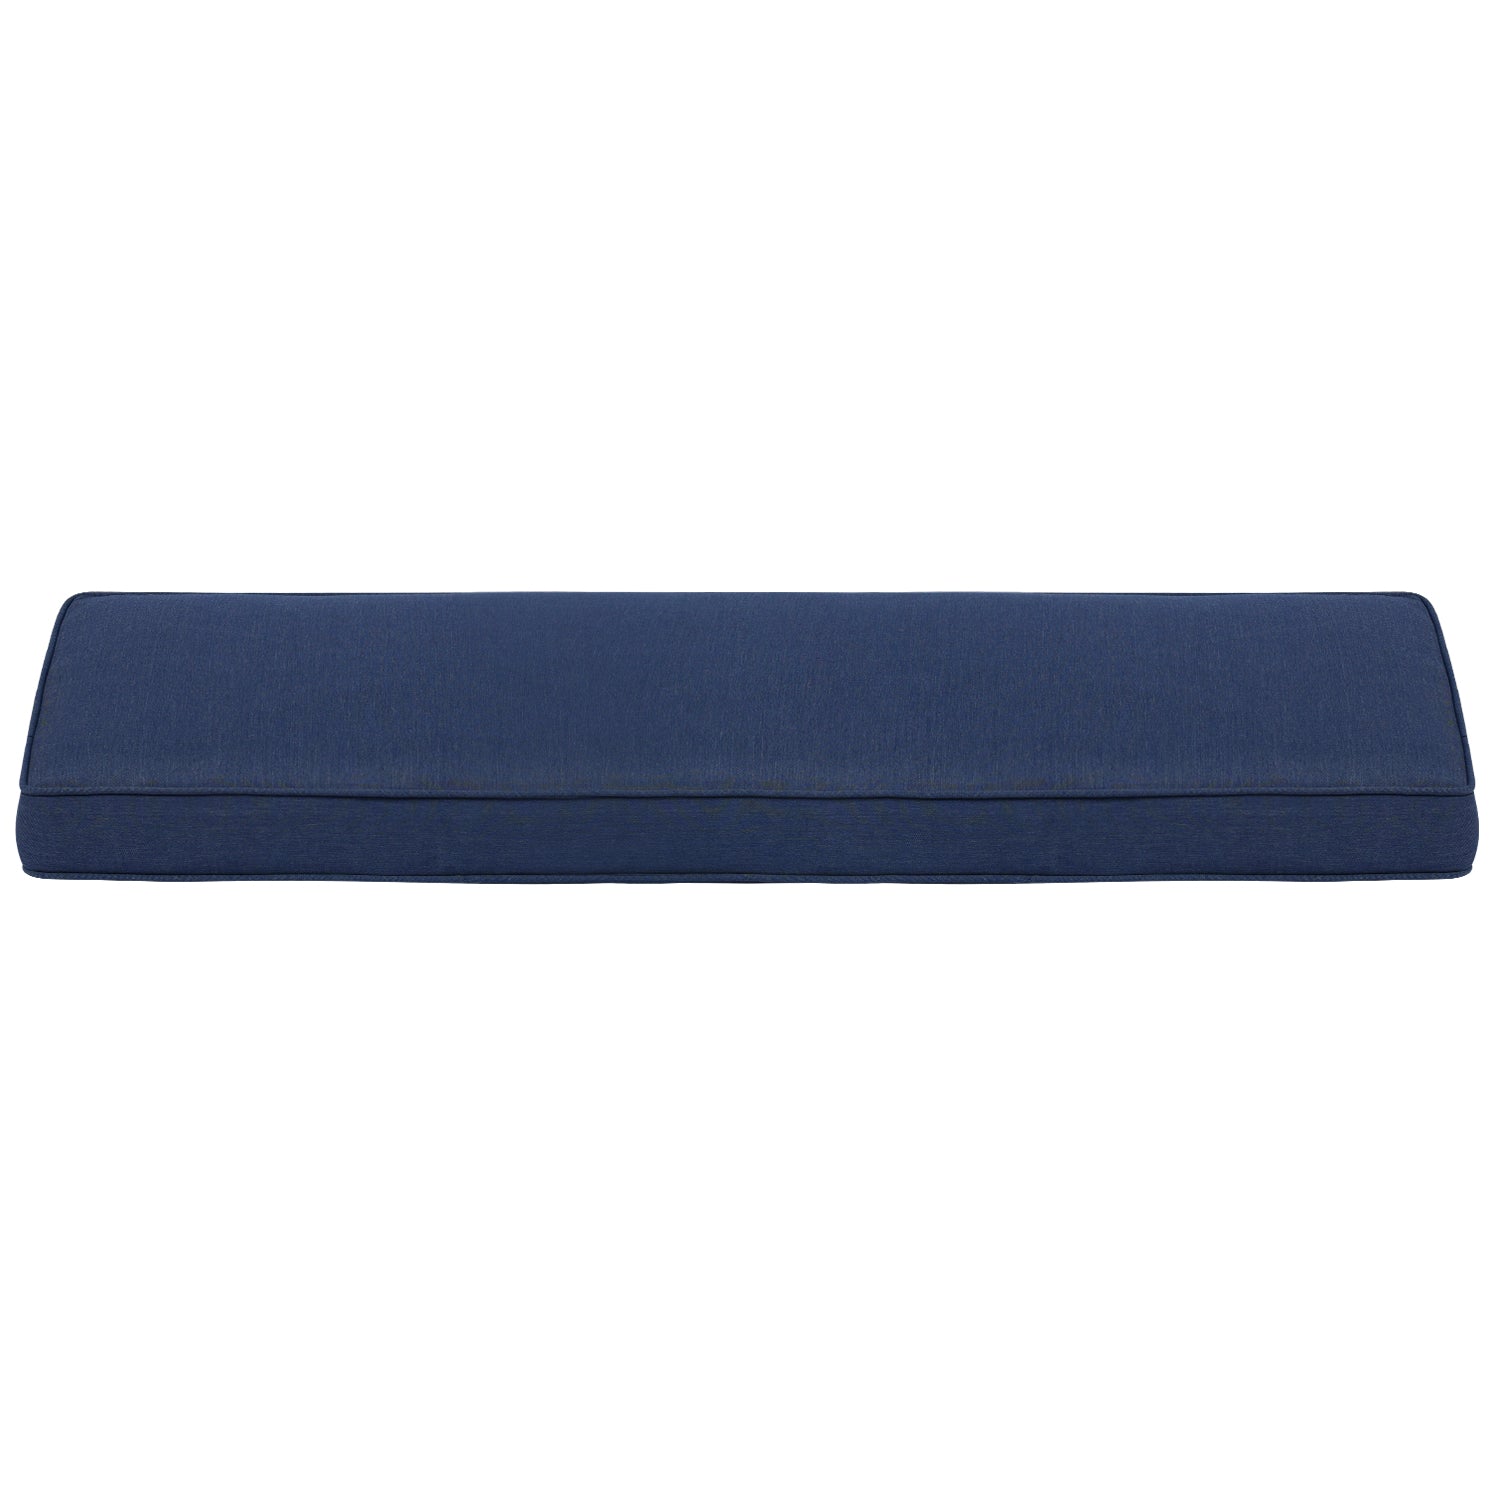 Patio Bench Cushion 46.5” x 17.5” x 3” CUSHION Aoodor Dark Blue  